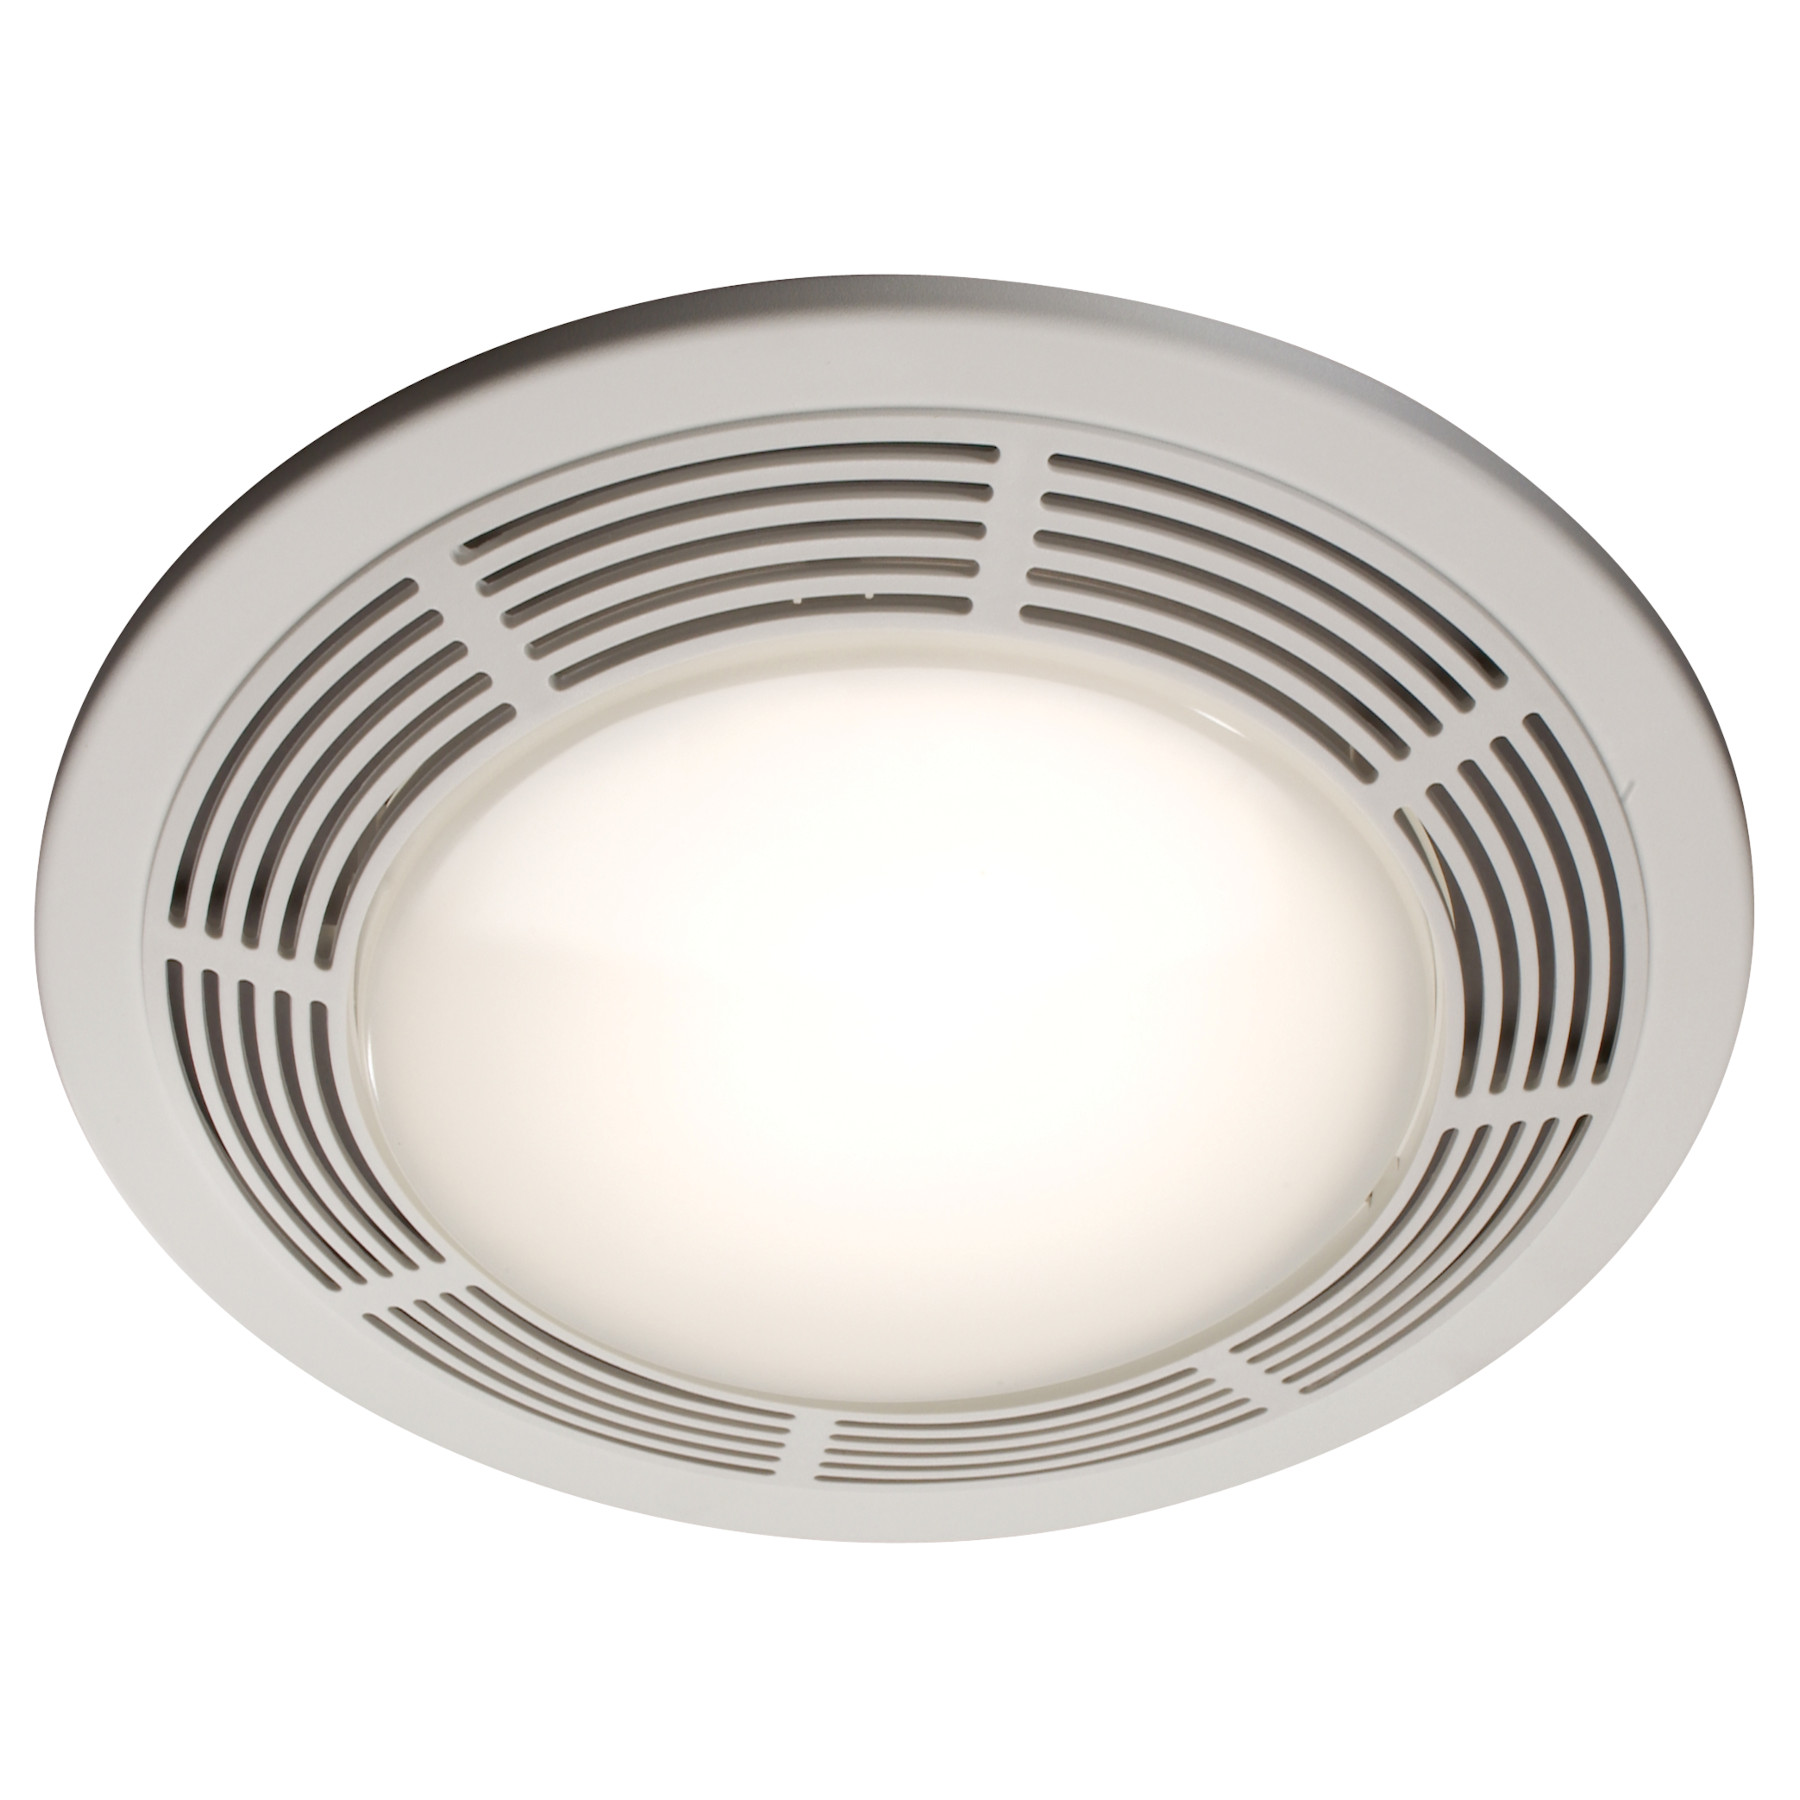 750 Broan Ventilation Fan W Light And Night Light